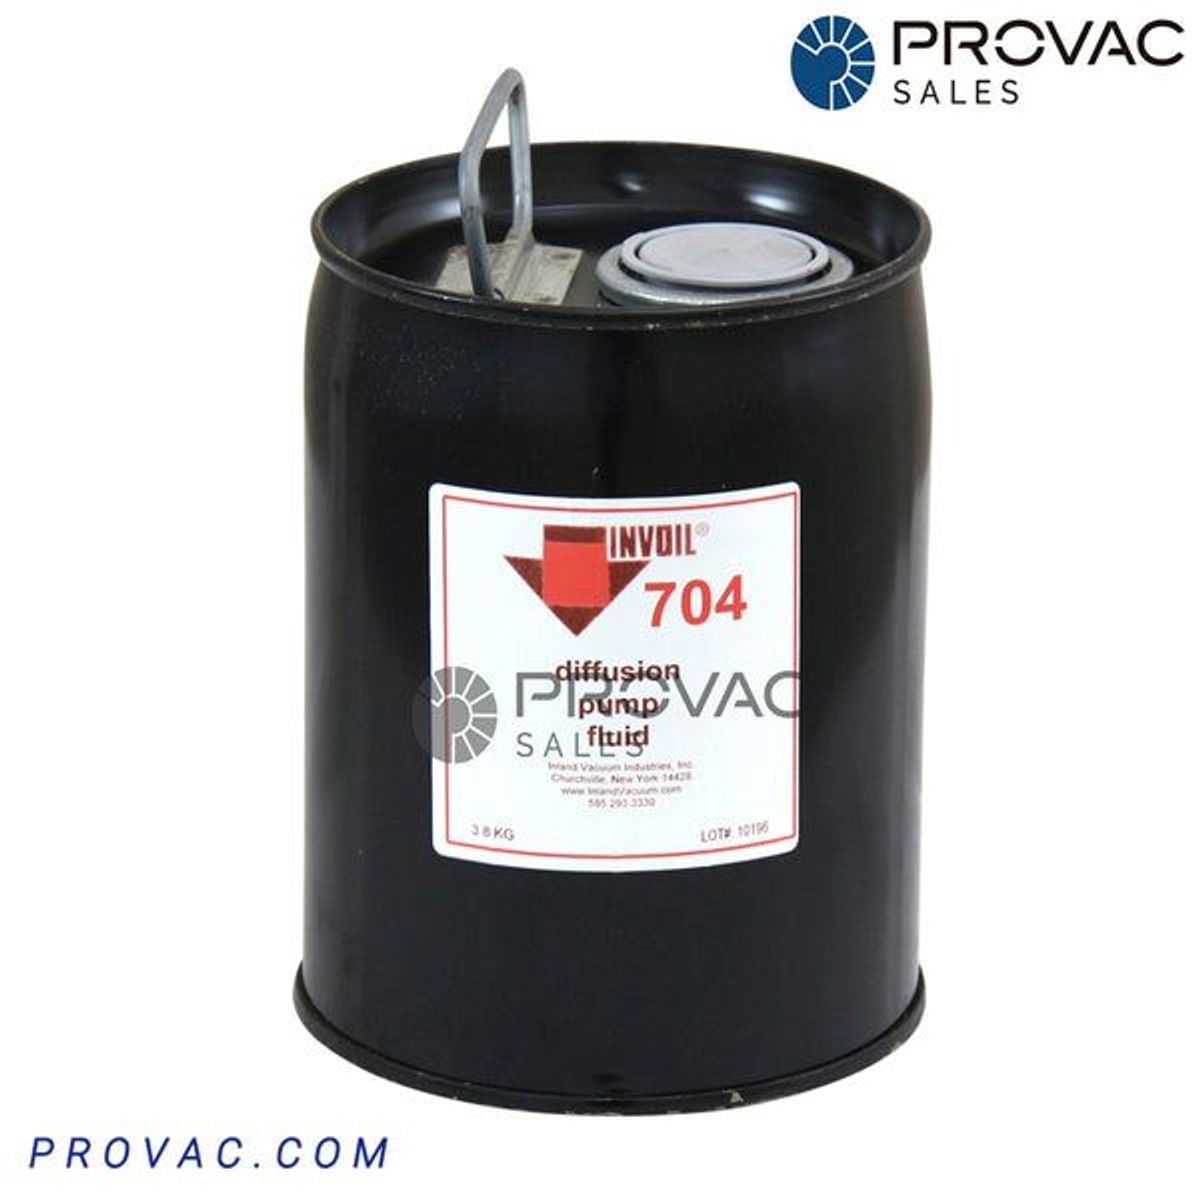 Invoil 704 Diffusion Pump Oil, 3.8 kg Image 1